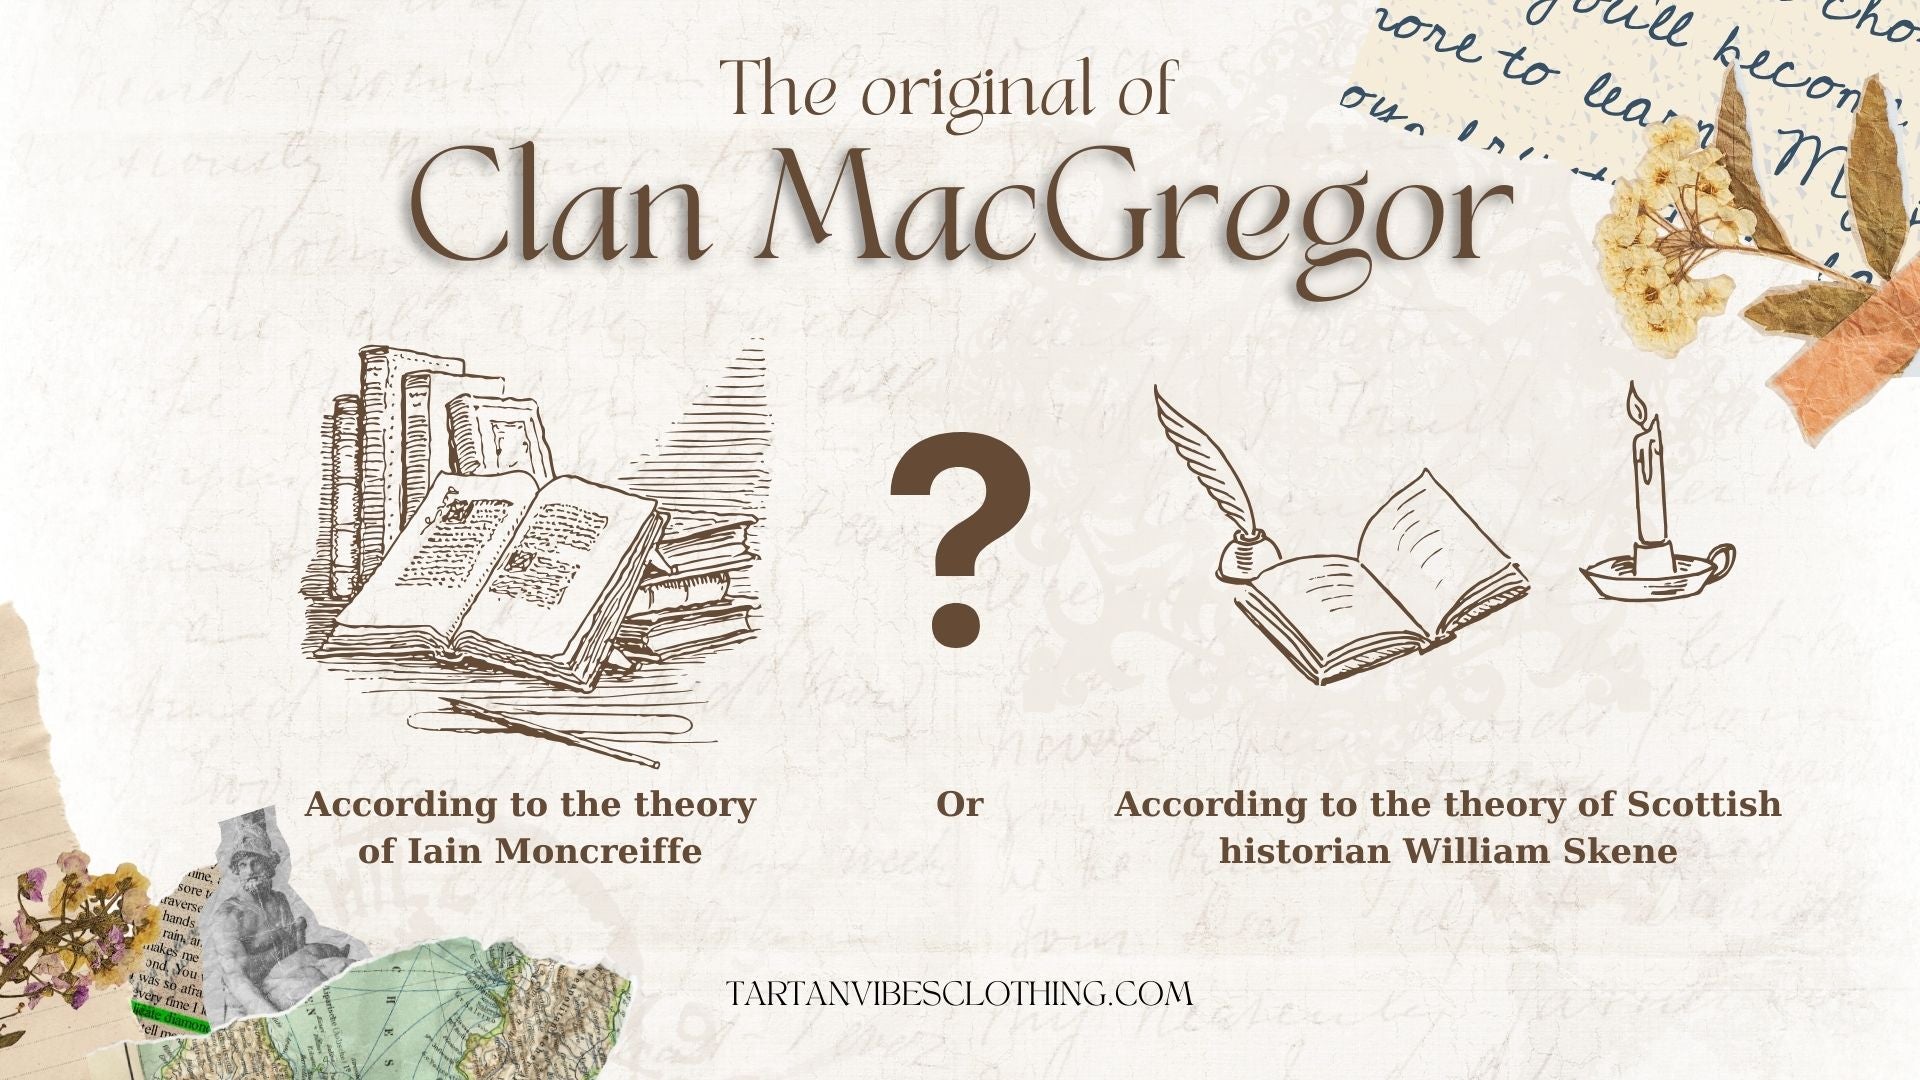 The original of Clan MacGregor